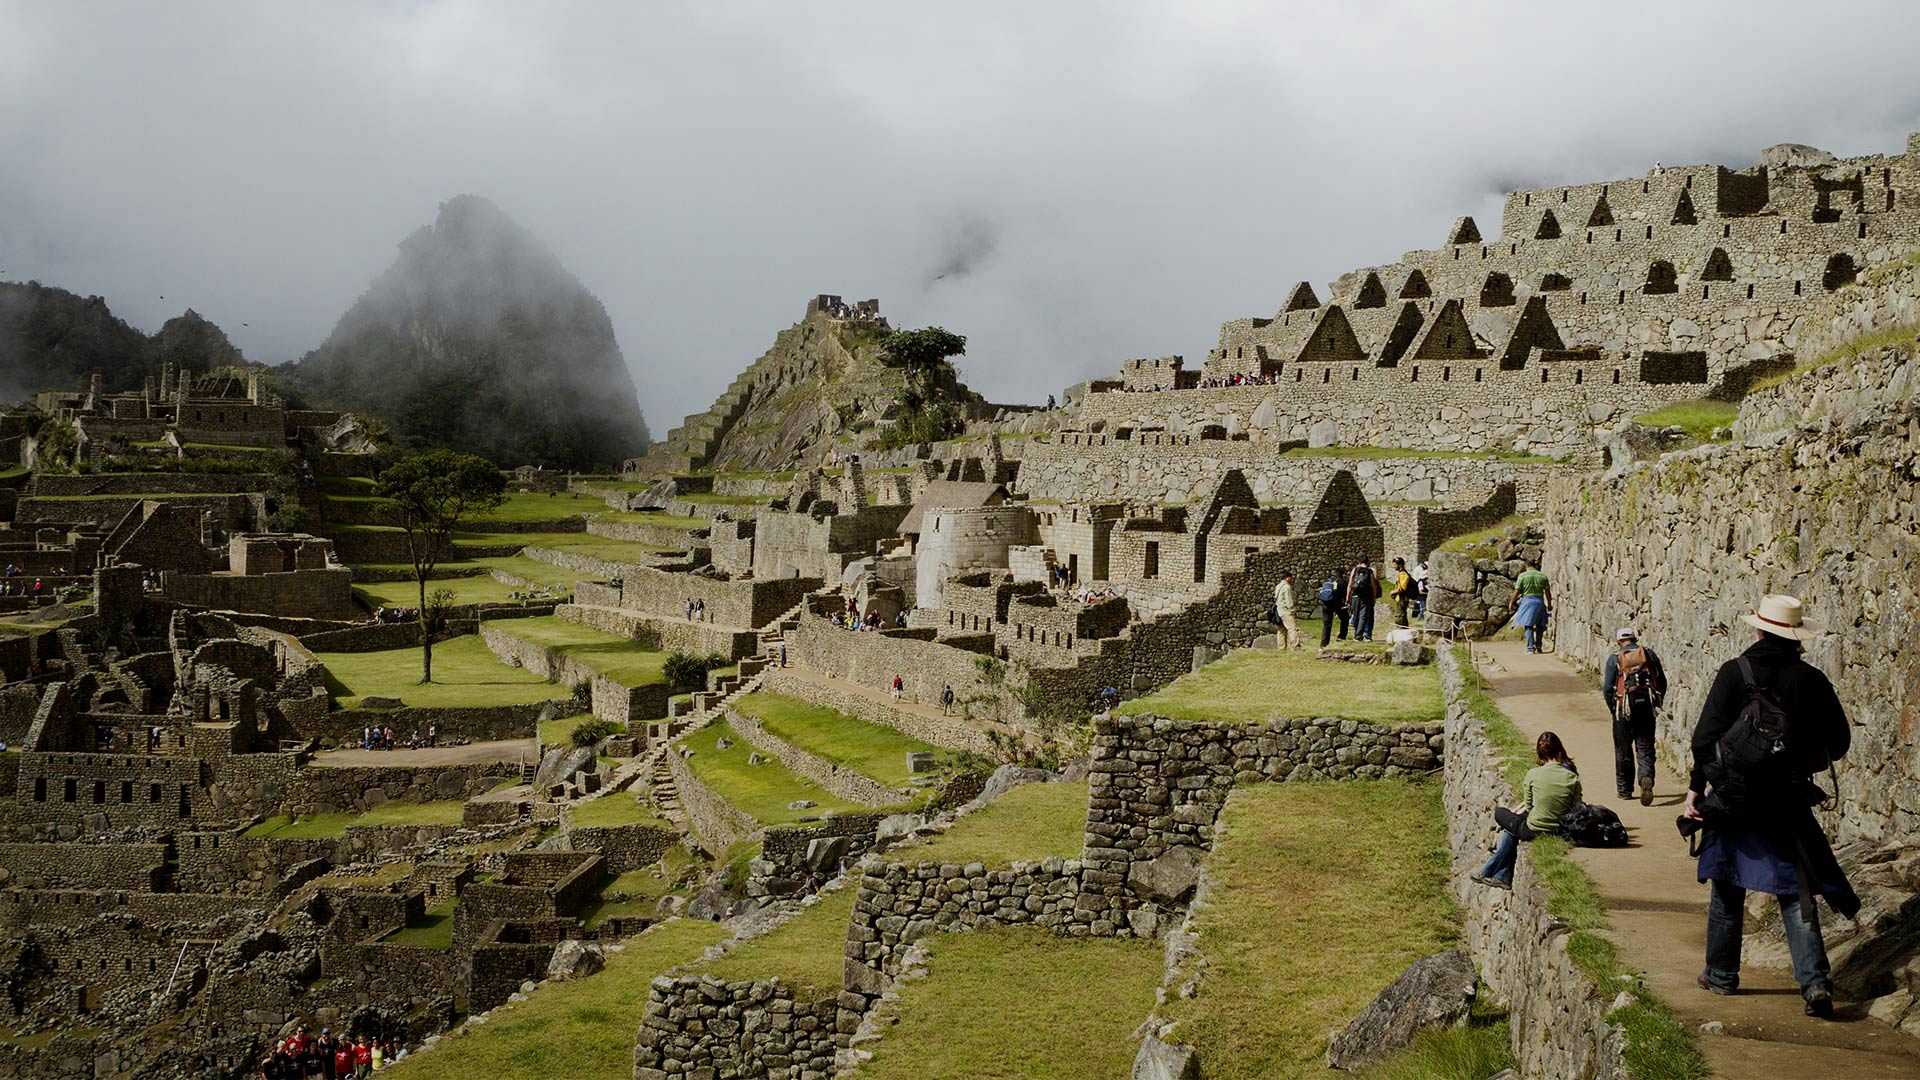 Percorrido Cusco-Machu Picchu, conheça Cusco e Machu Picchu de uma só vez